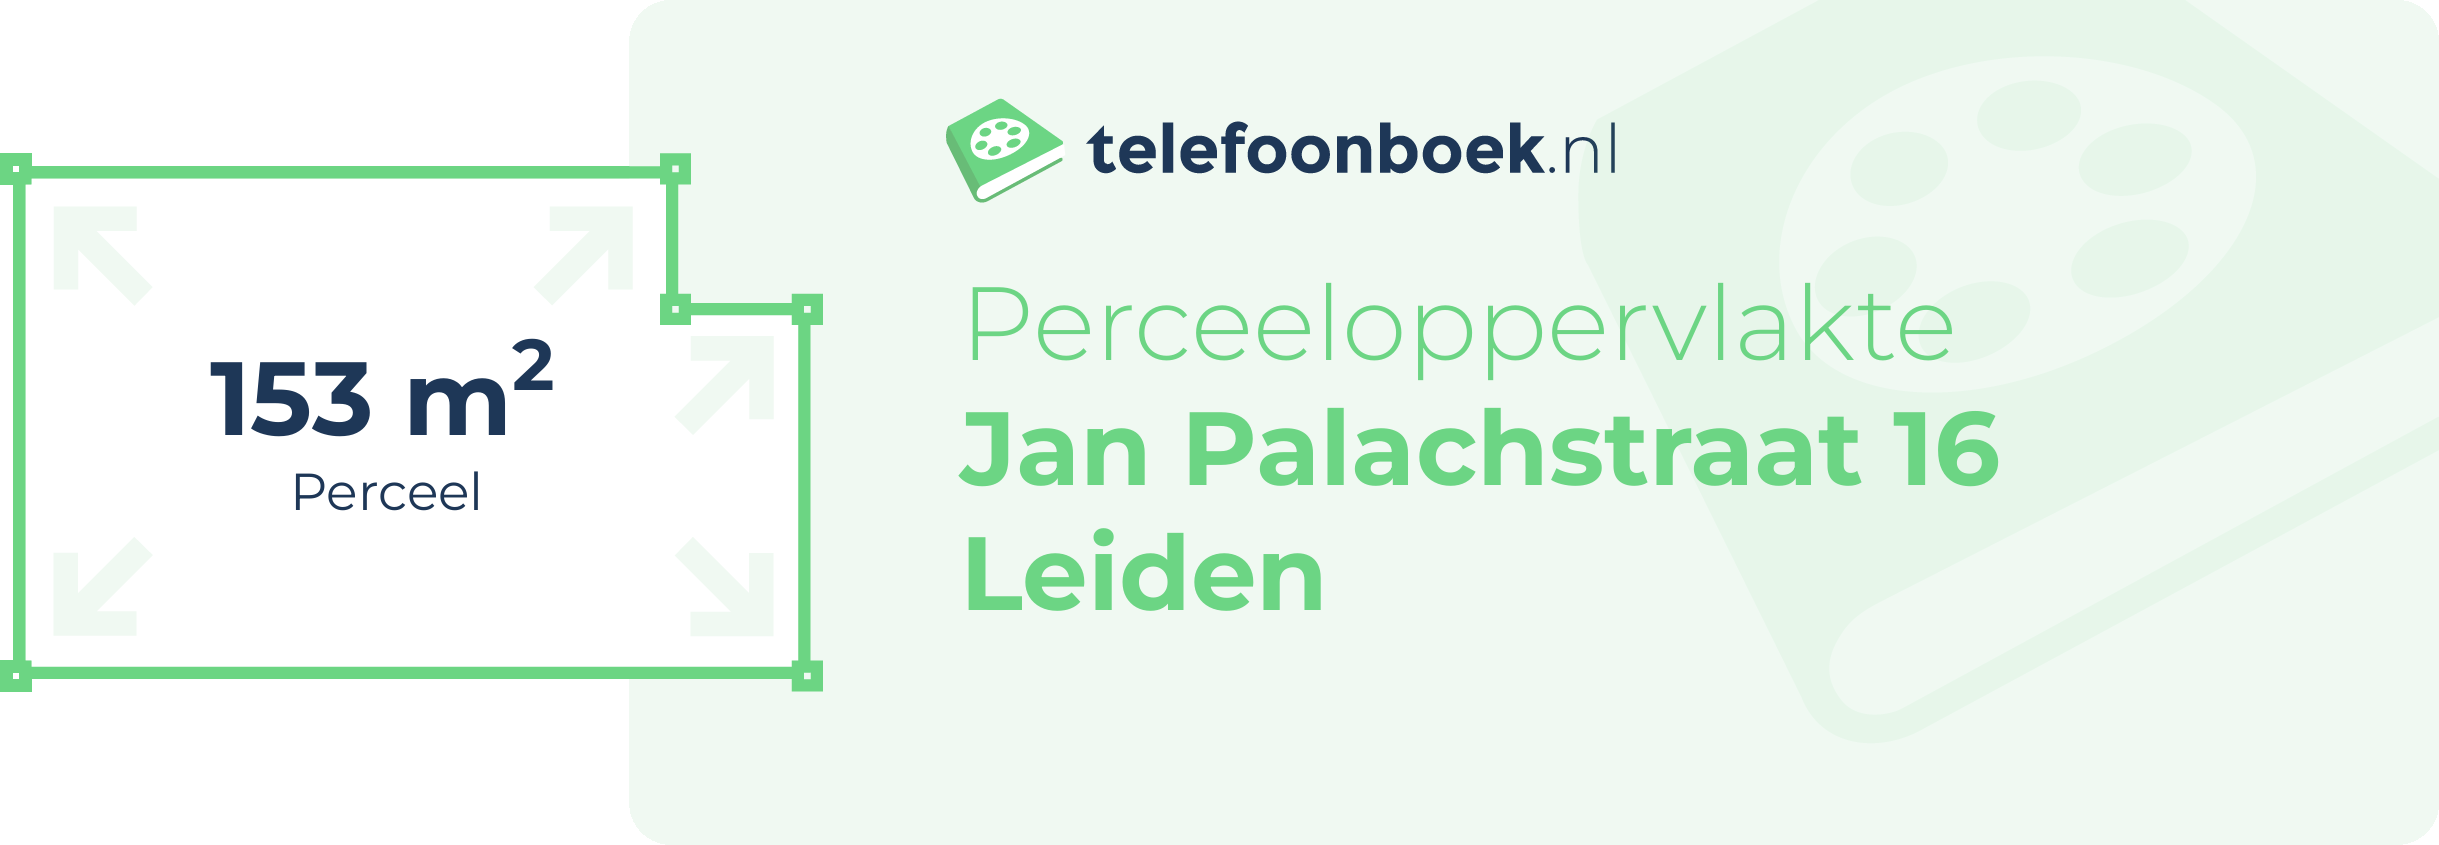 Perceeloppervlakte Jan Palachstraat 16 Leiden